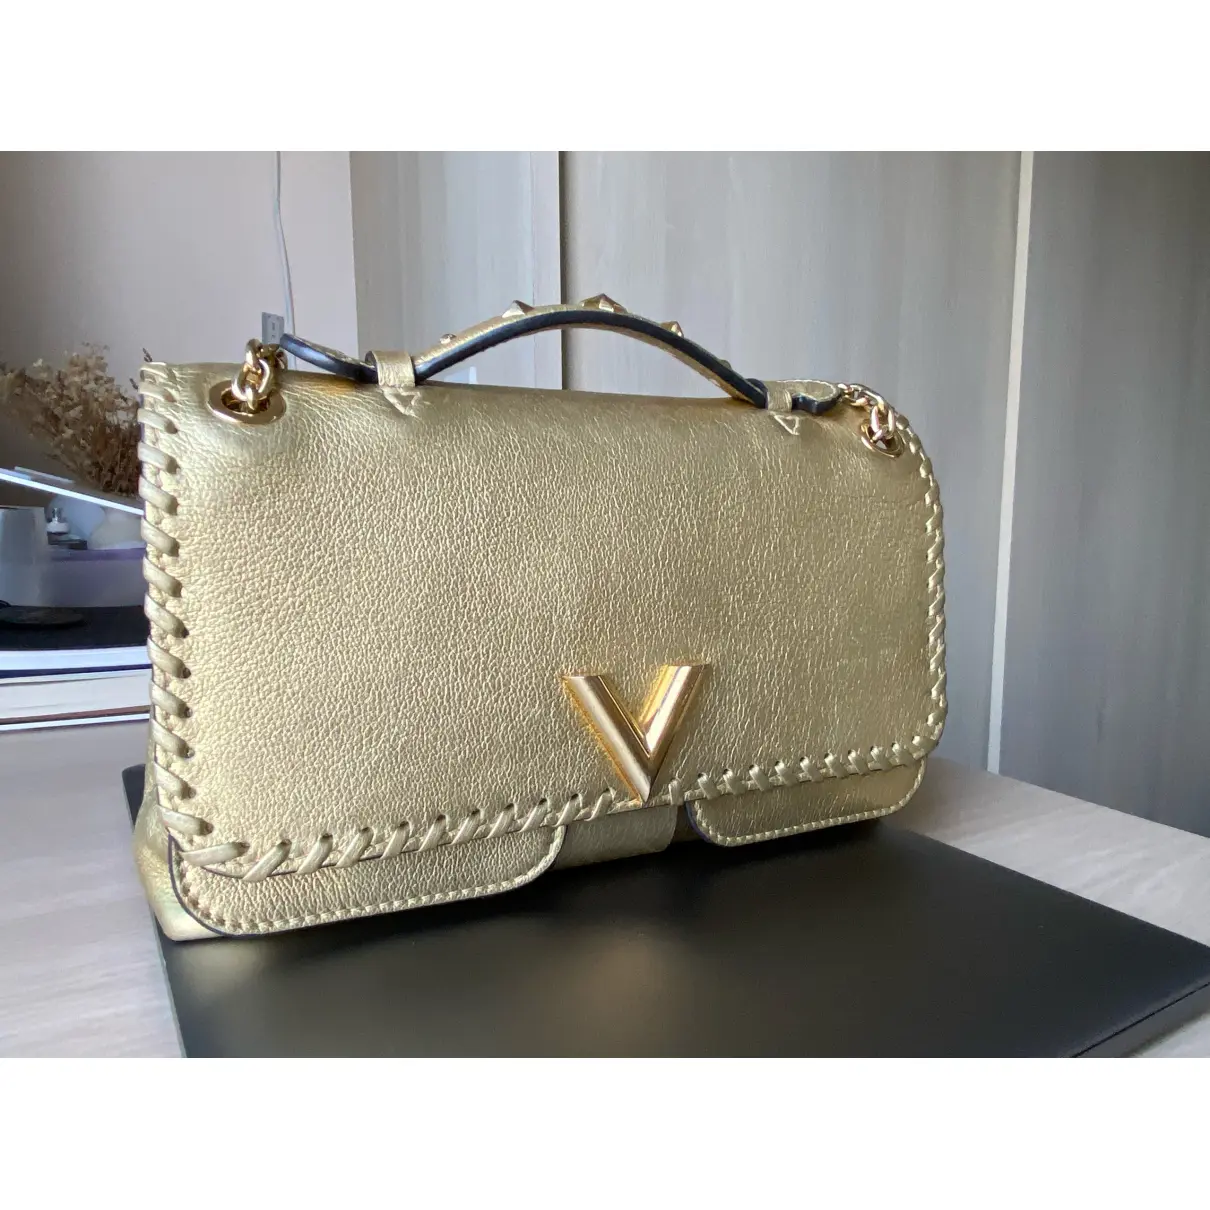 Very leather handbag Louis Vuitton